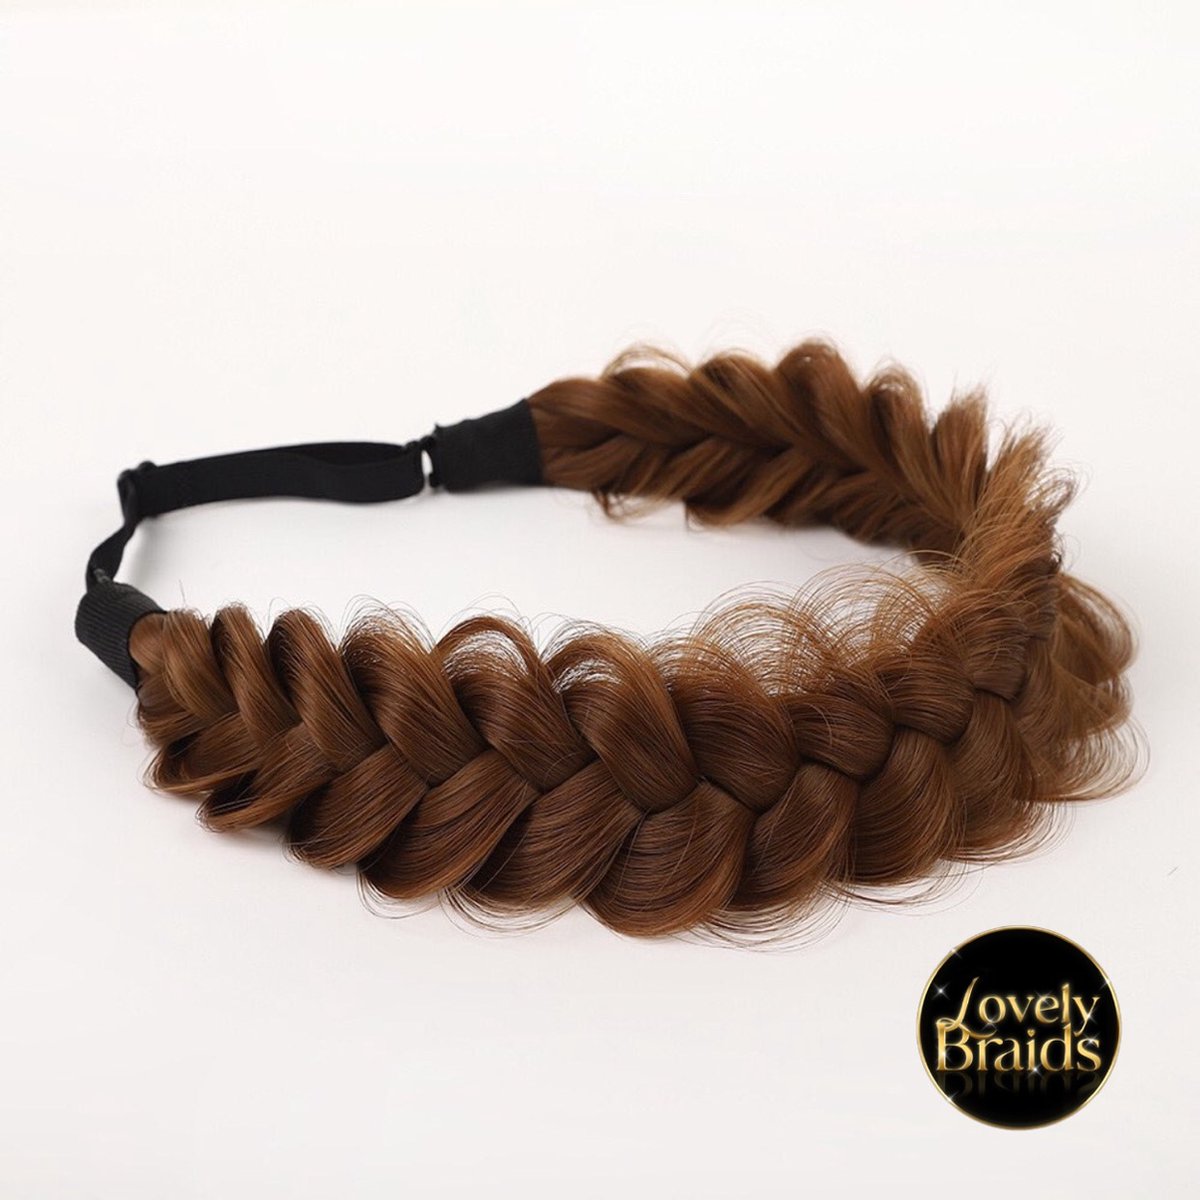 Lovely braids - crazy copper - hair braids - messy - haarband - infinity braids - Haarvlecht band - fashion - diadeem - festival look - festival hair - hair braid - hair fashion - haarmode